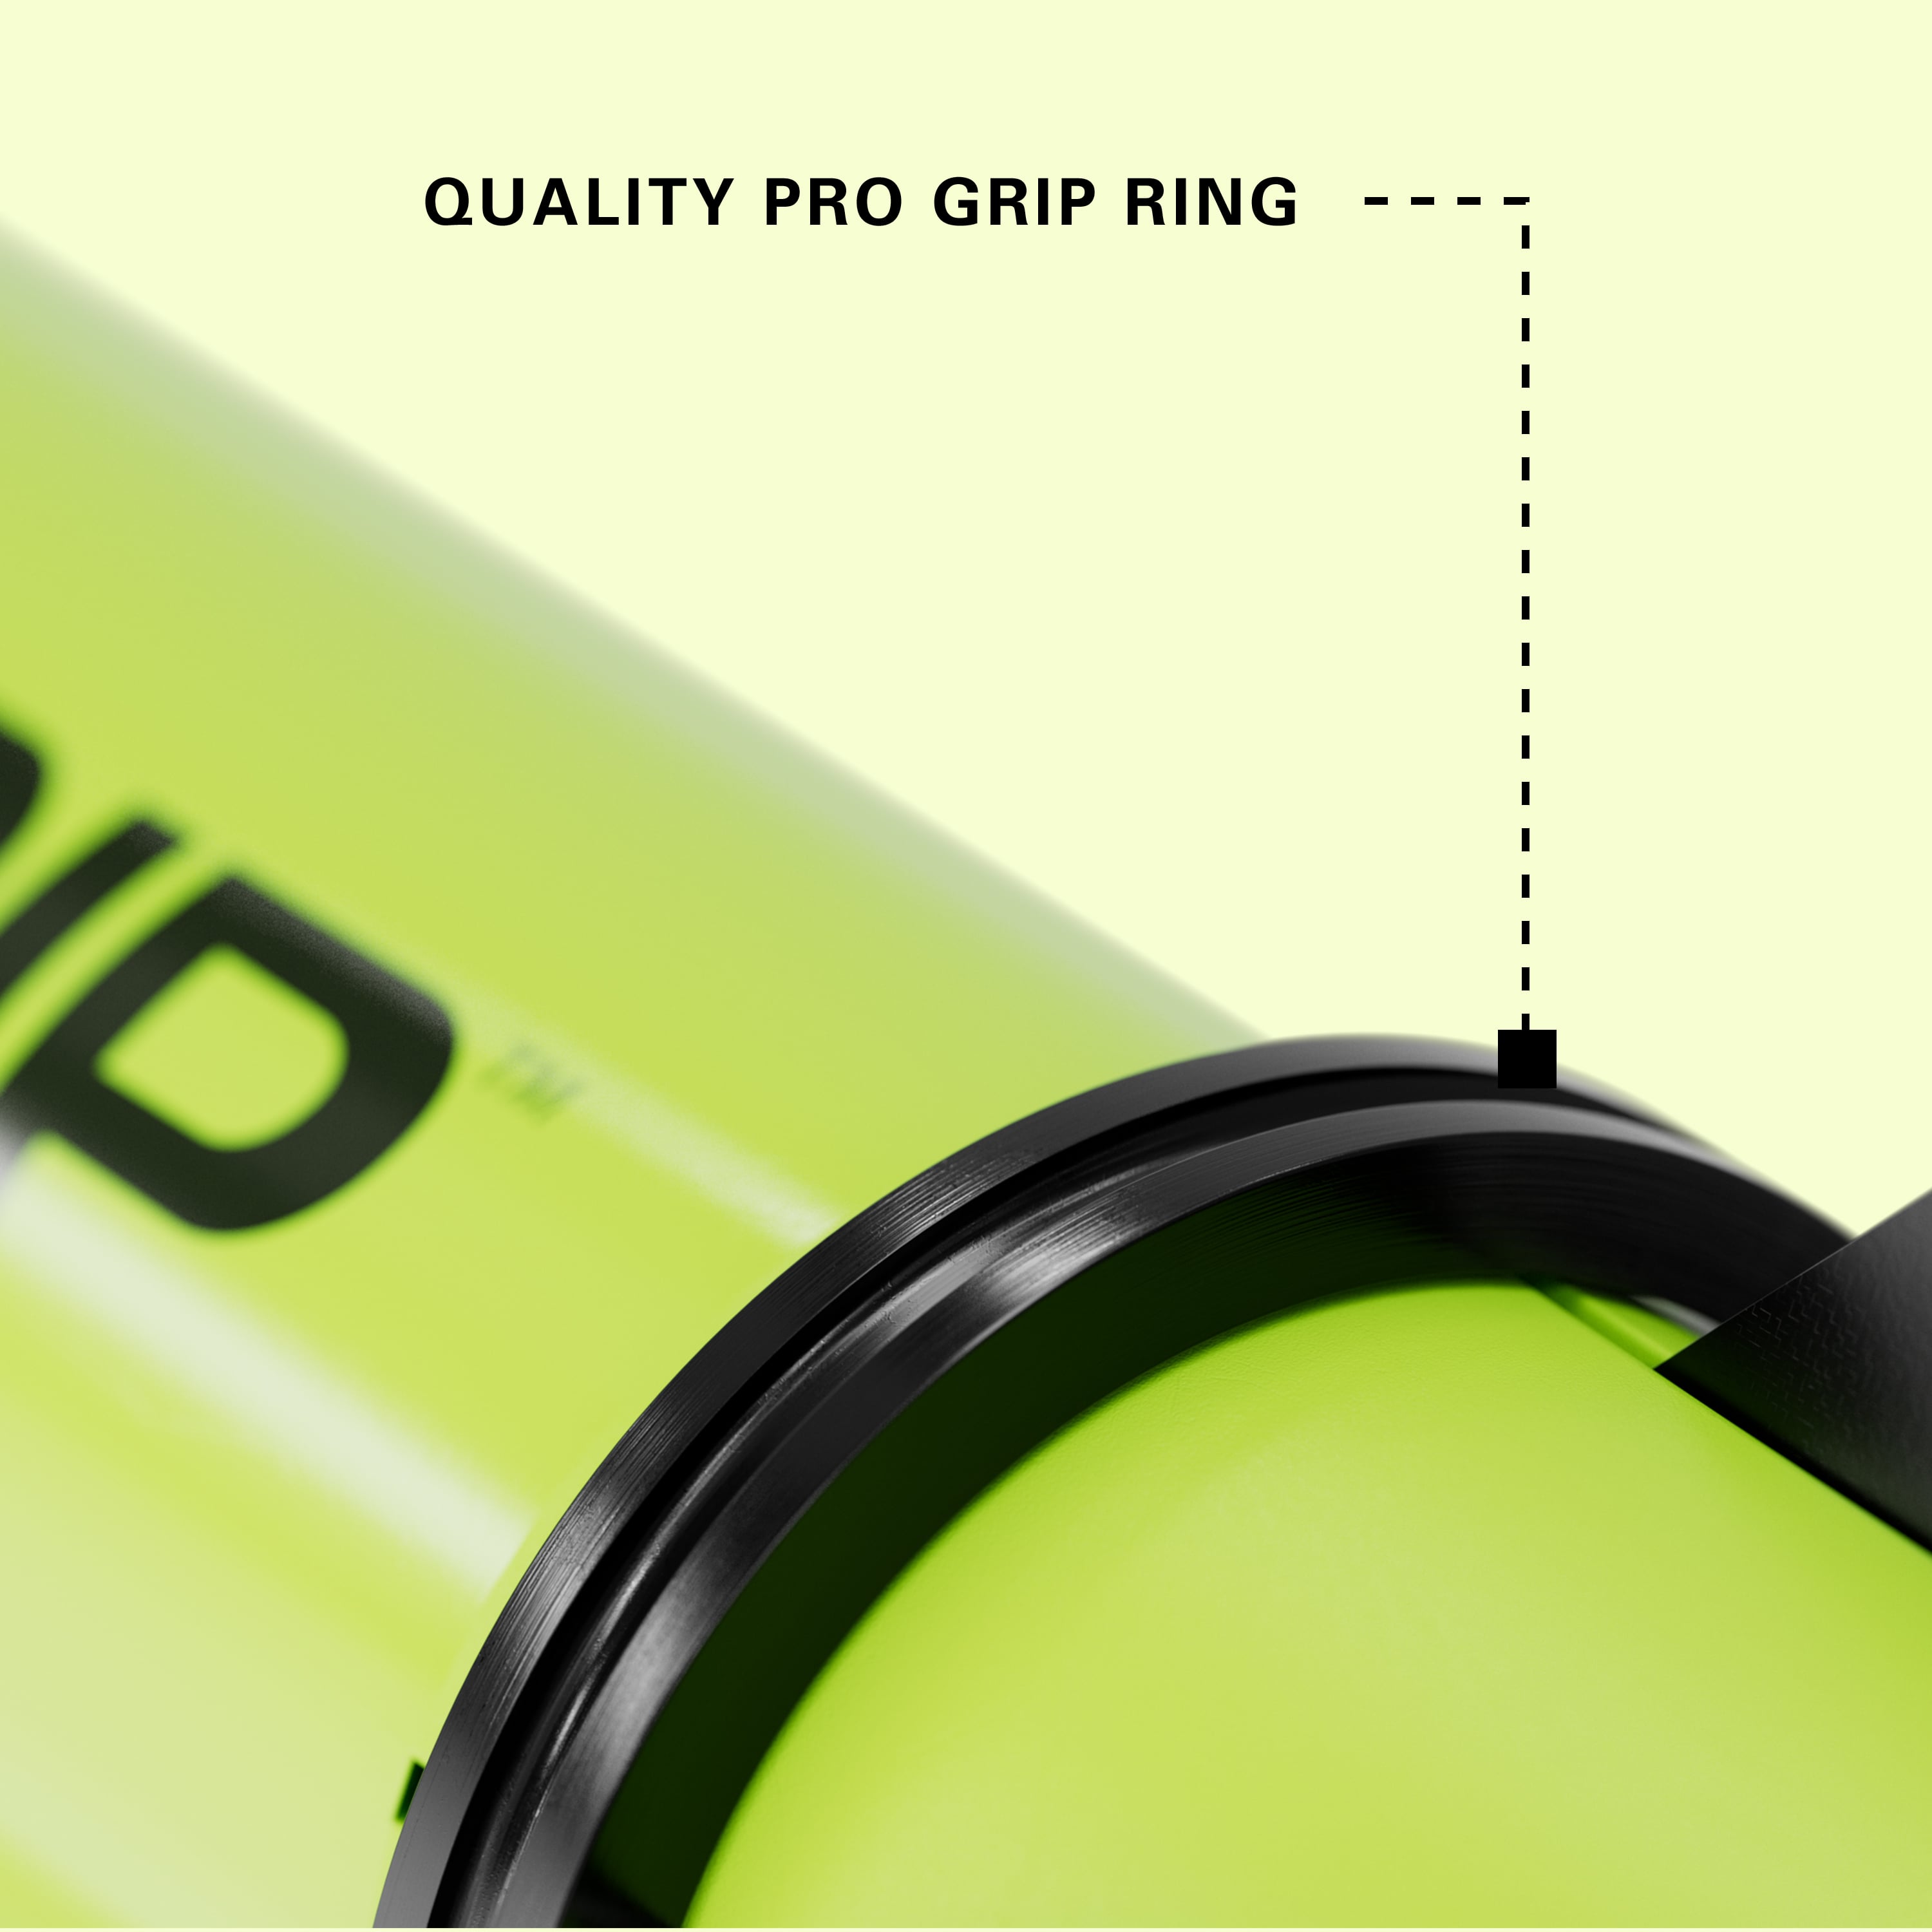 Target Pro Grip Shafts Set grün